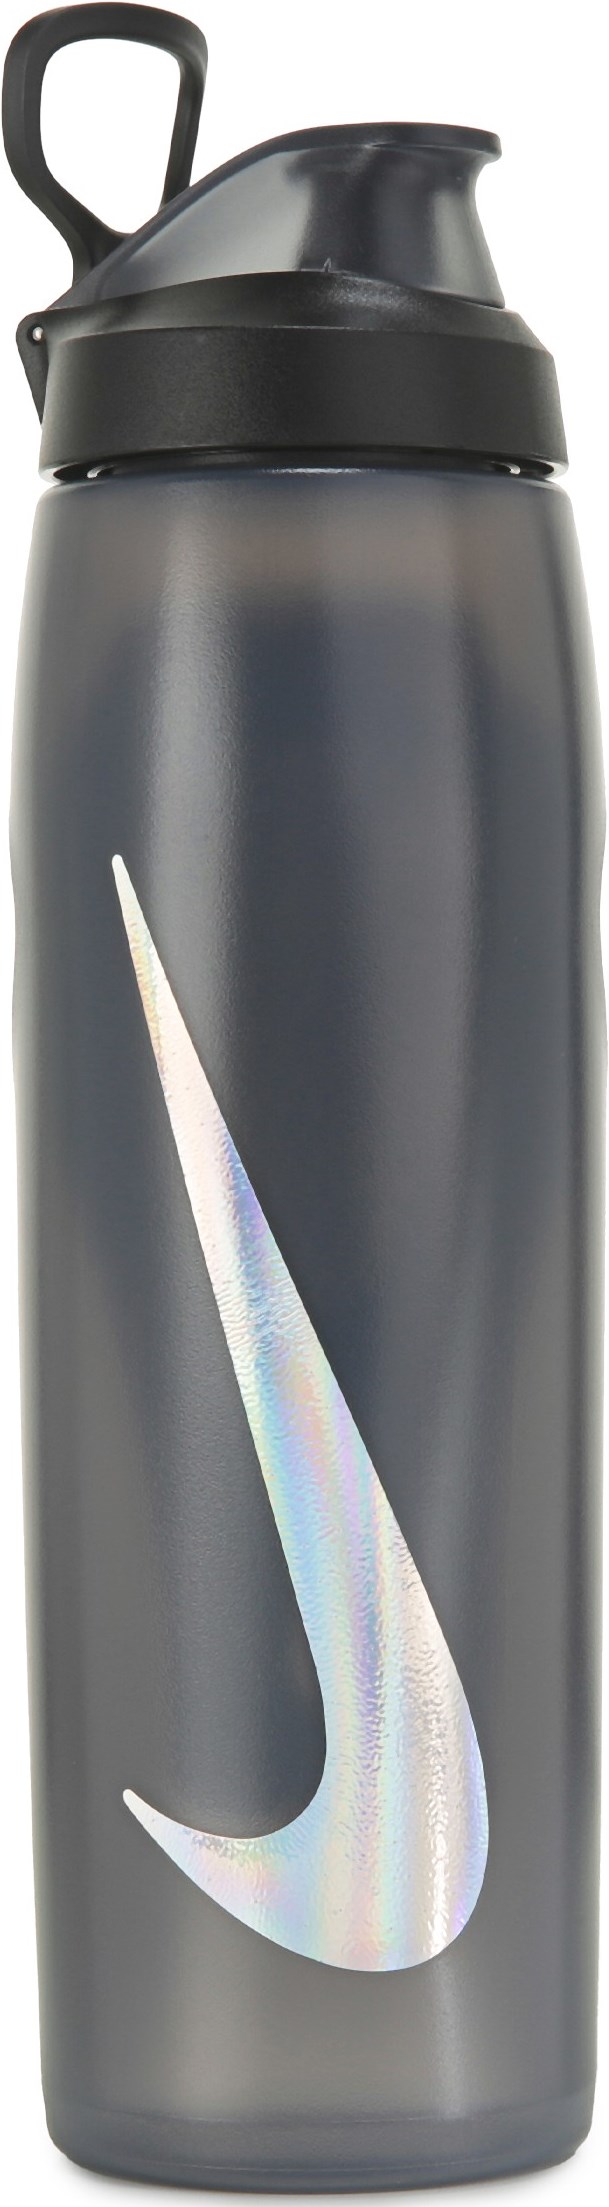 Nike Refuel Water Bottle with Locking Lid - Anthracite Black & Silviridescent - 32 oz